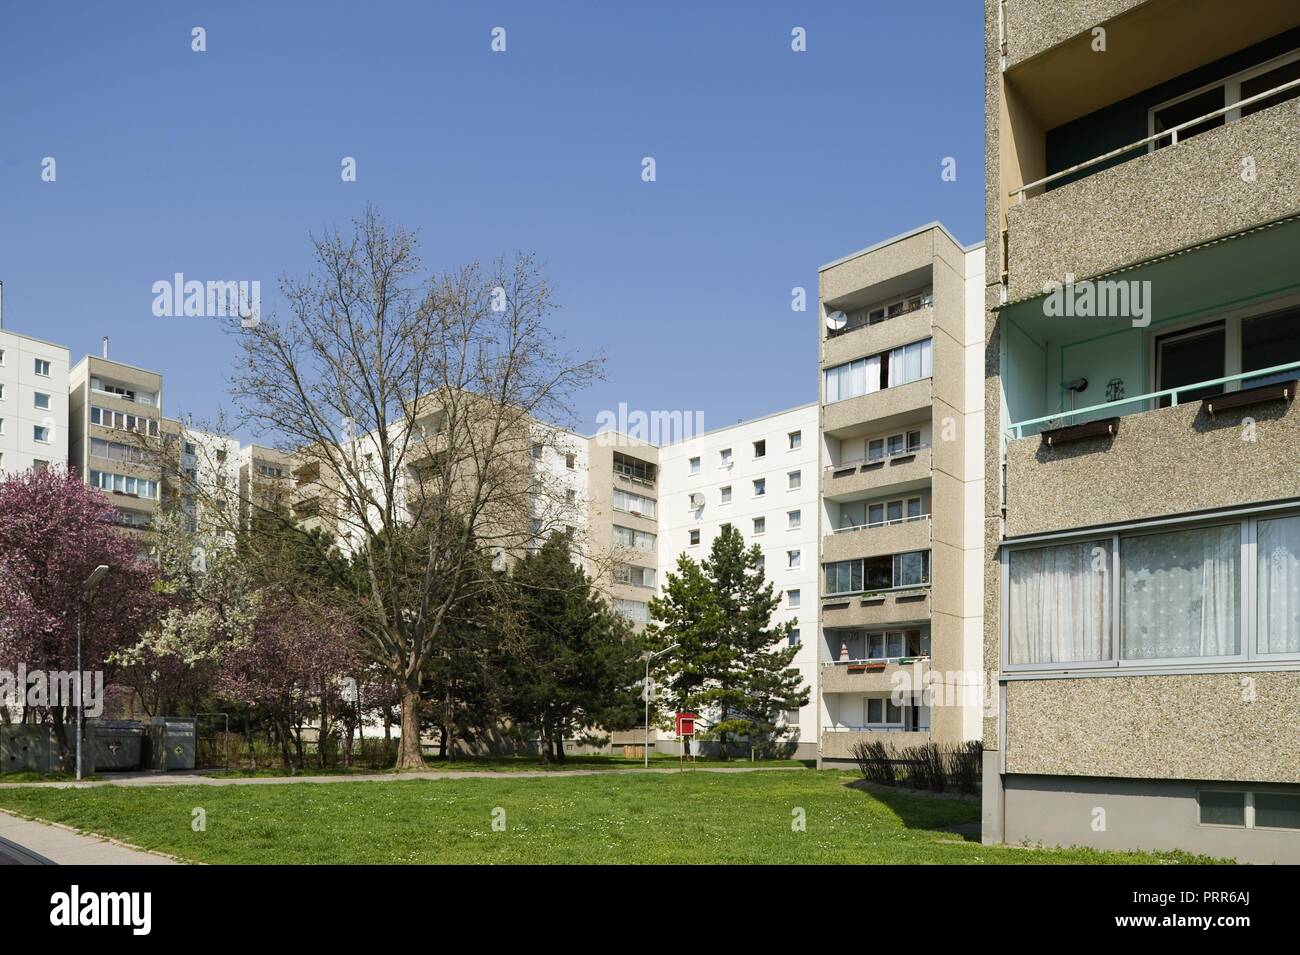 Wien, Plattenbauten - Vienna, Building made with precast Concrete Slabs Stock Photo